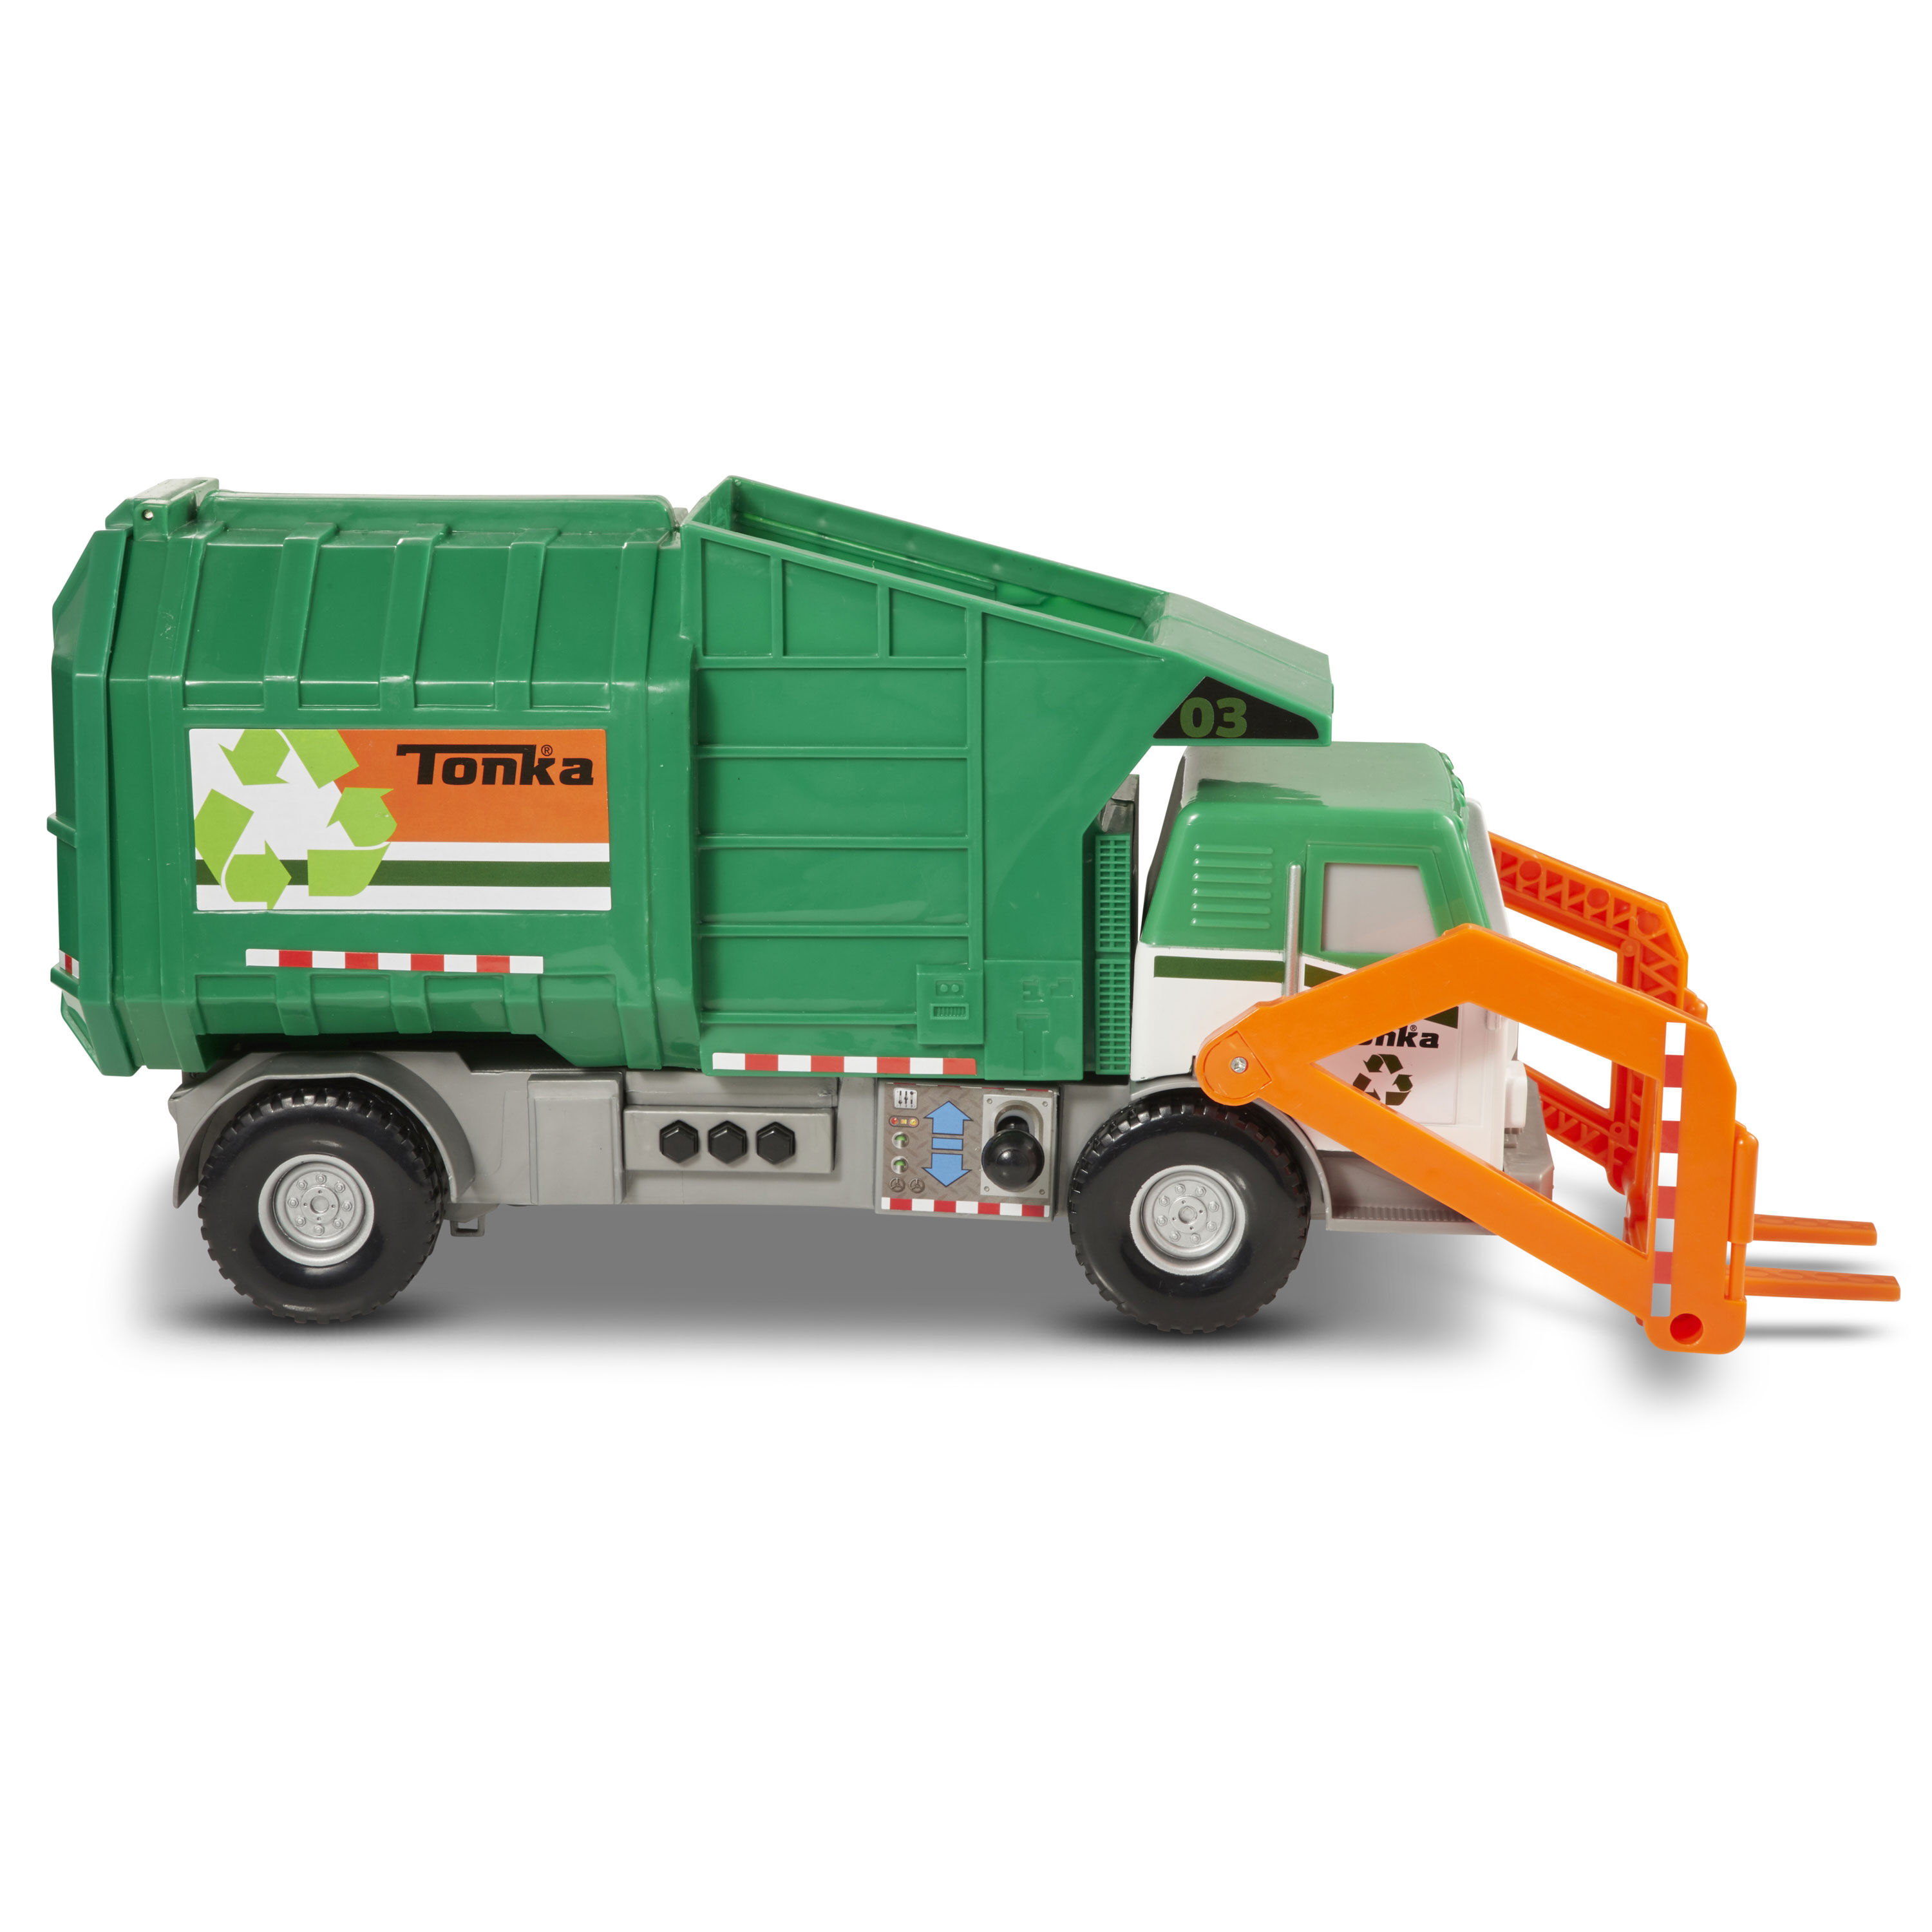 tonka motorized garbage truck